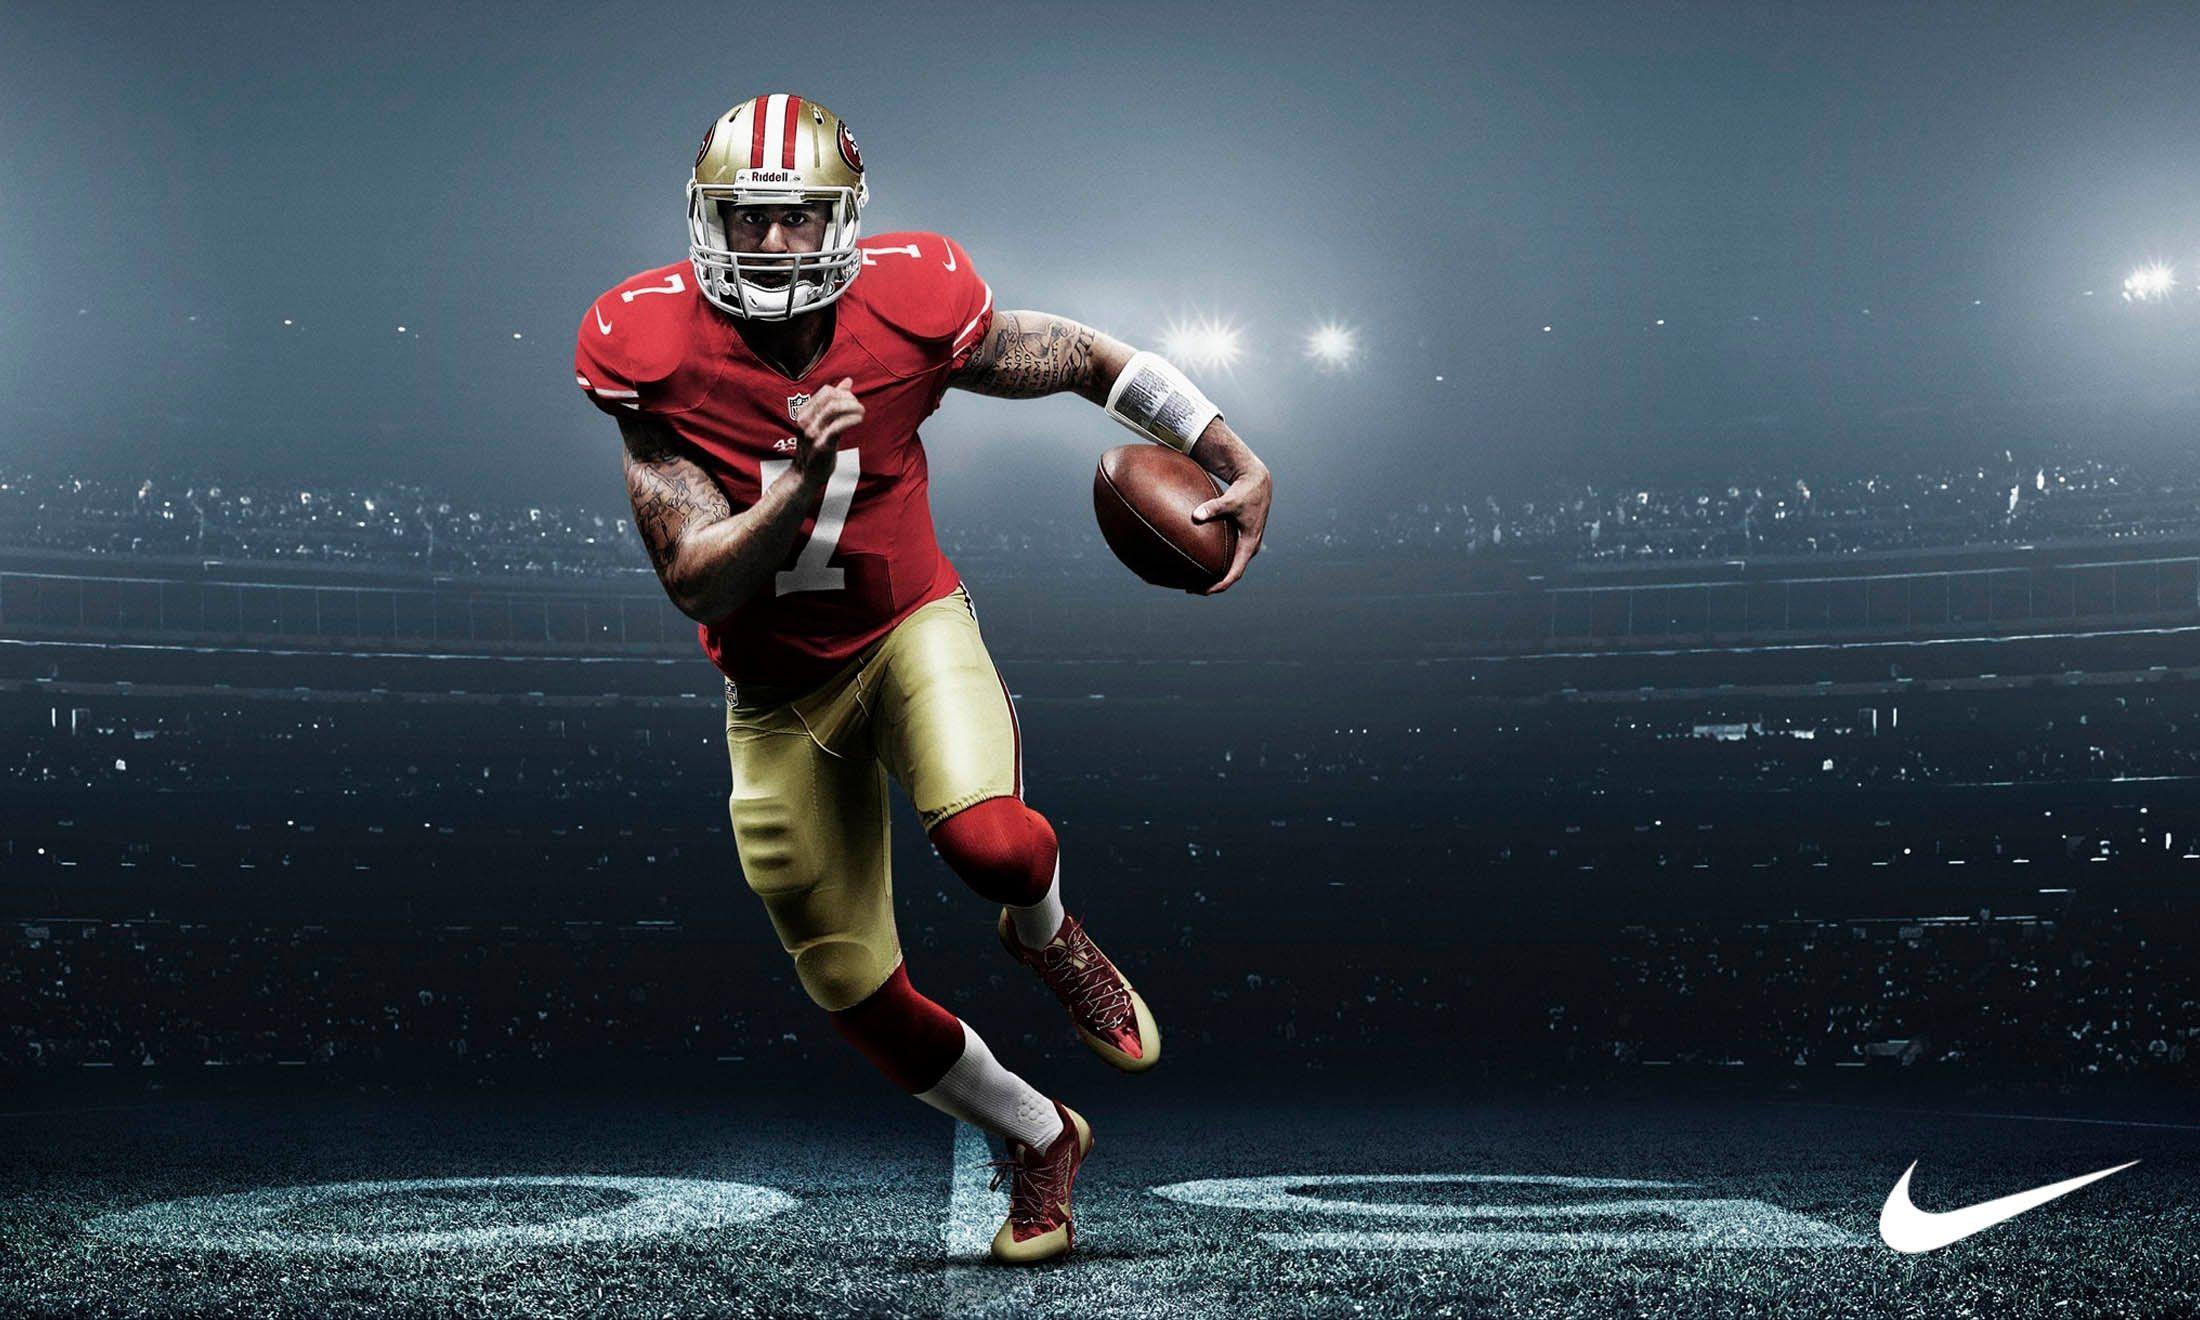 NFL Football Player 7 San Francisco 49ers Nike wallpaper HD 2016